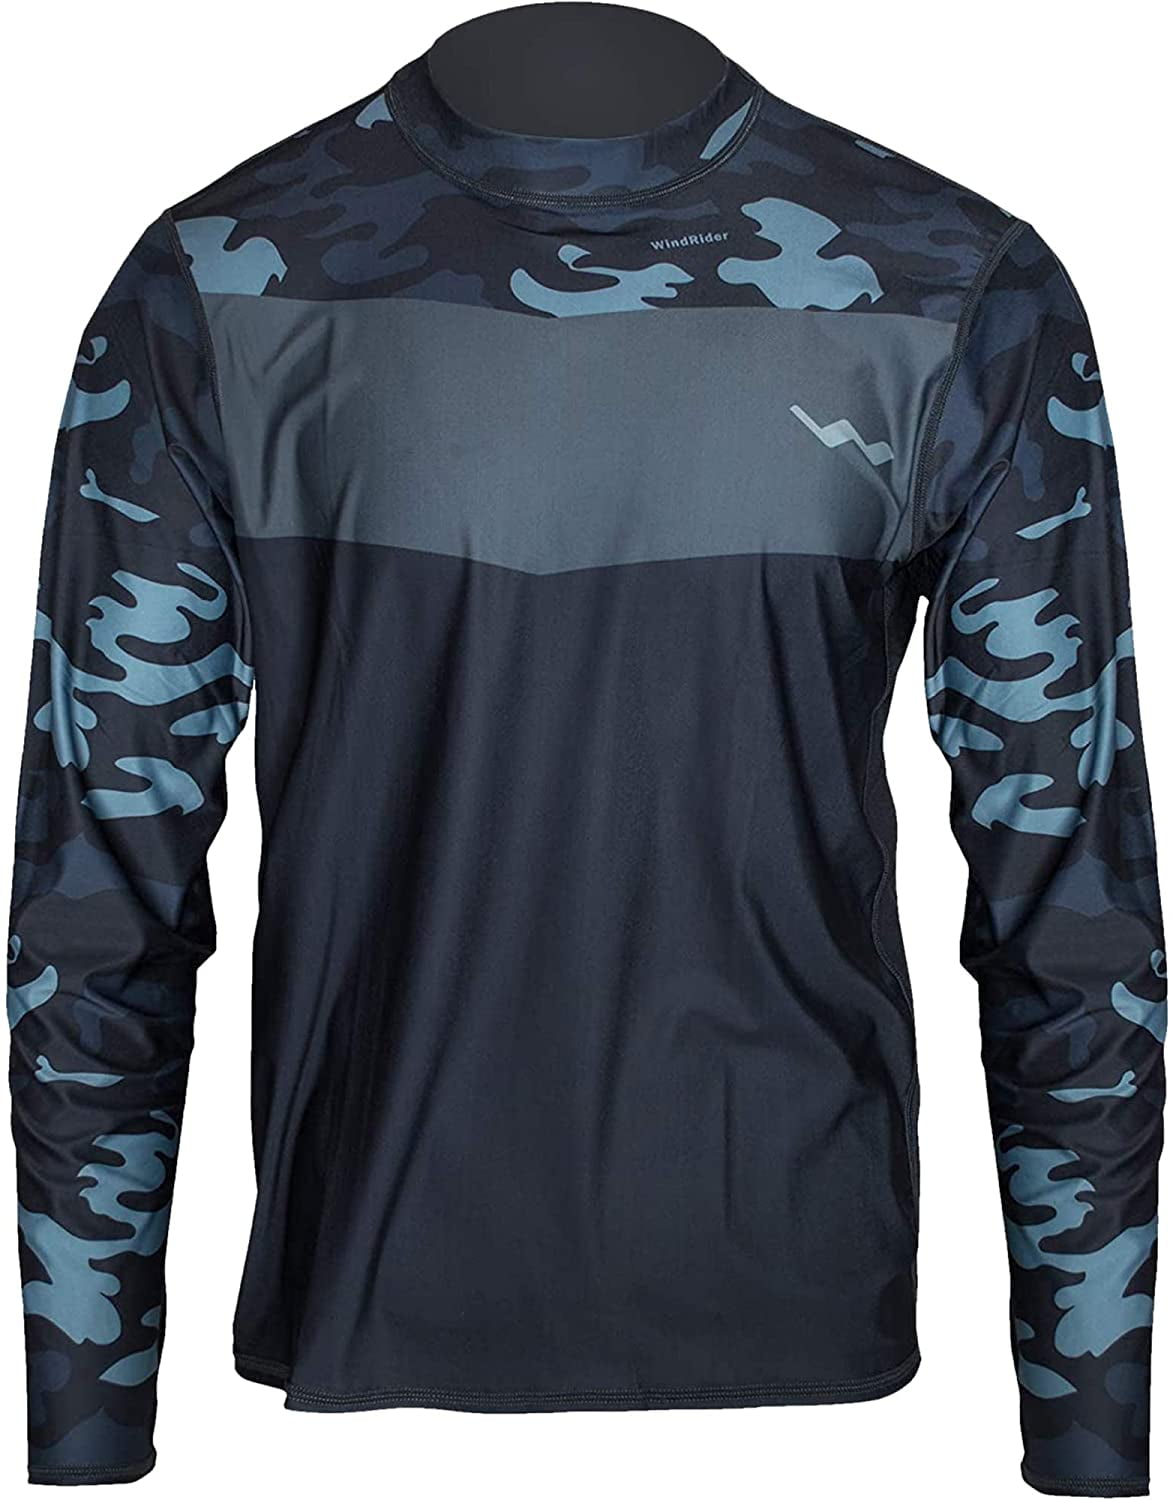 Men's UPF 50+ Long Sleeve Fishing Shirt FS01M – Badlands Outfitter